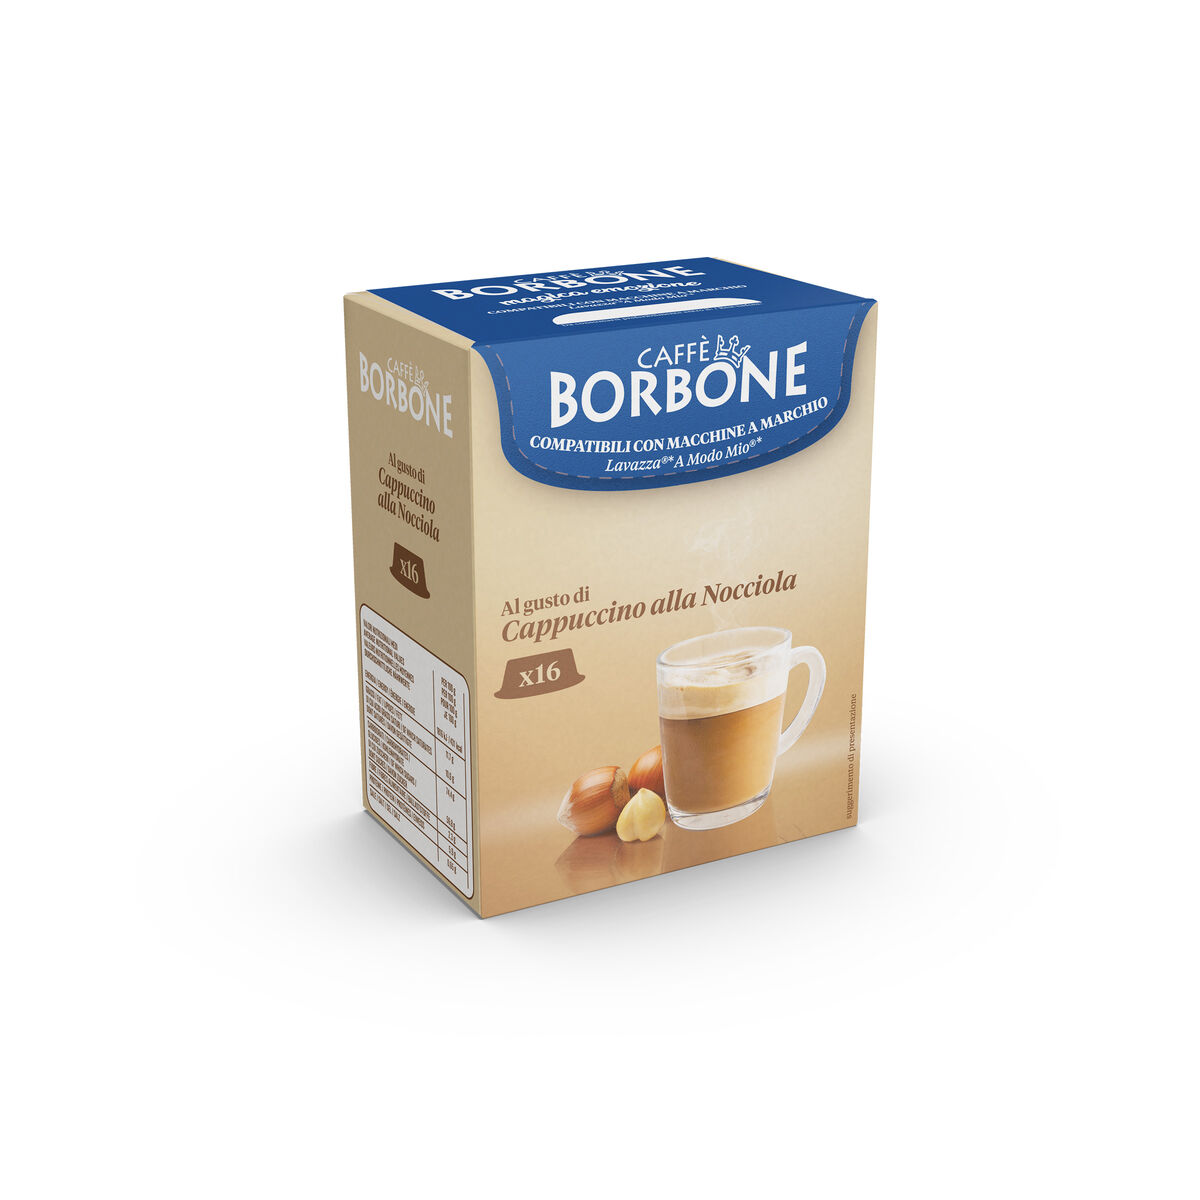 16 Capsules Borbone CAPPUCCINO-FLAVORED HAZELNUT Compatible with Nescafé®* Dolce  Gusto®* brand machines